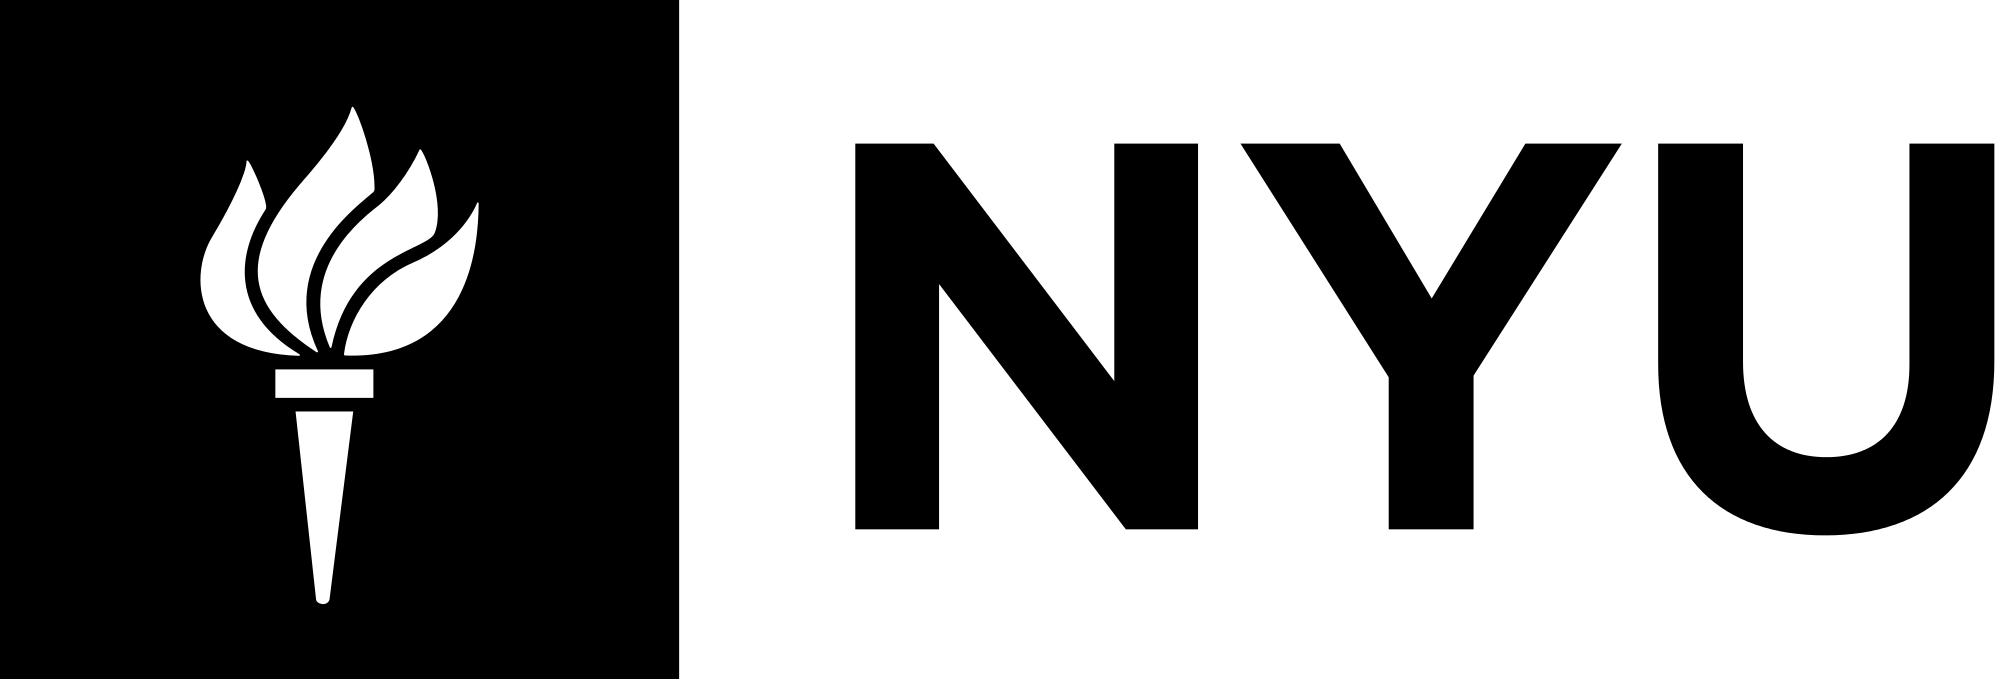 Open - New York University Logo (2000x679)